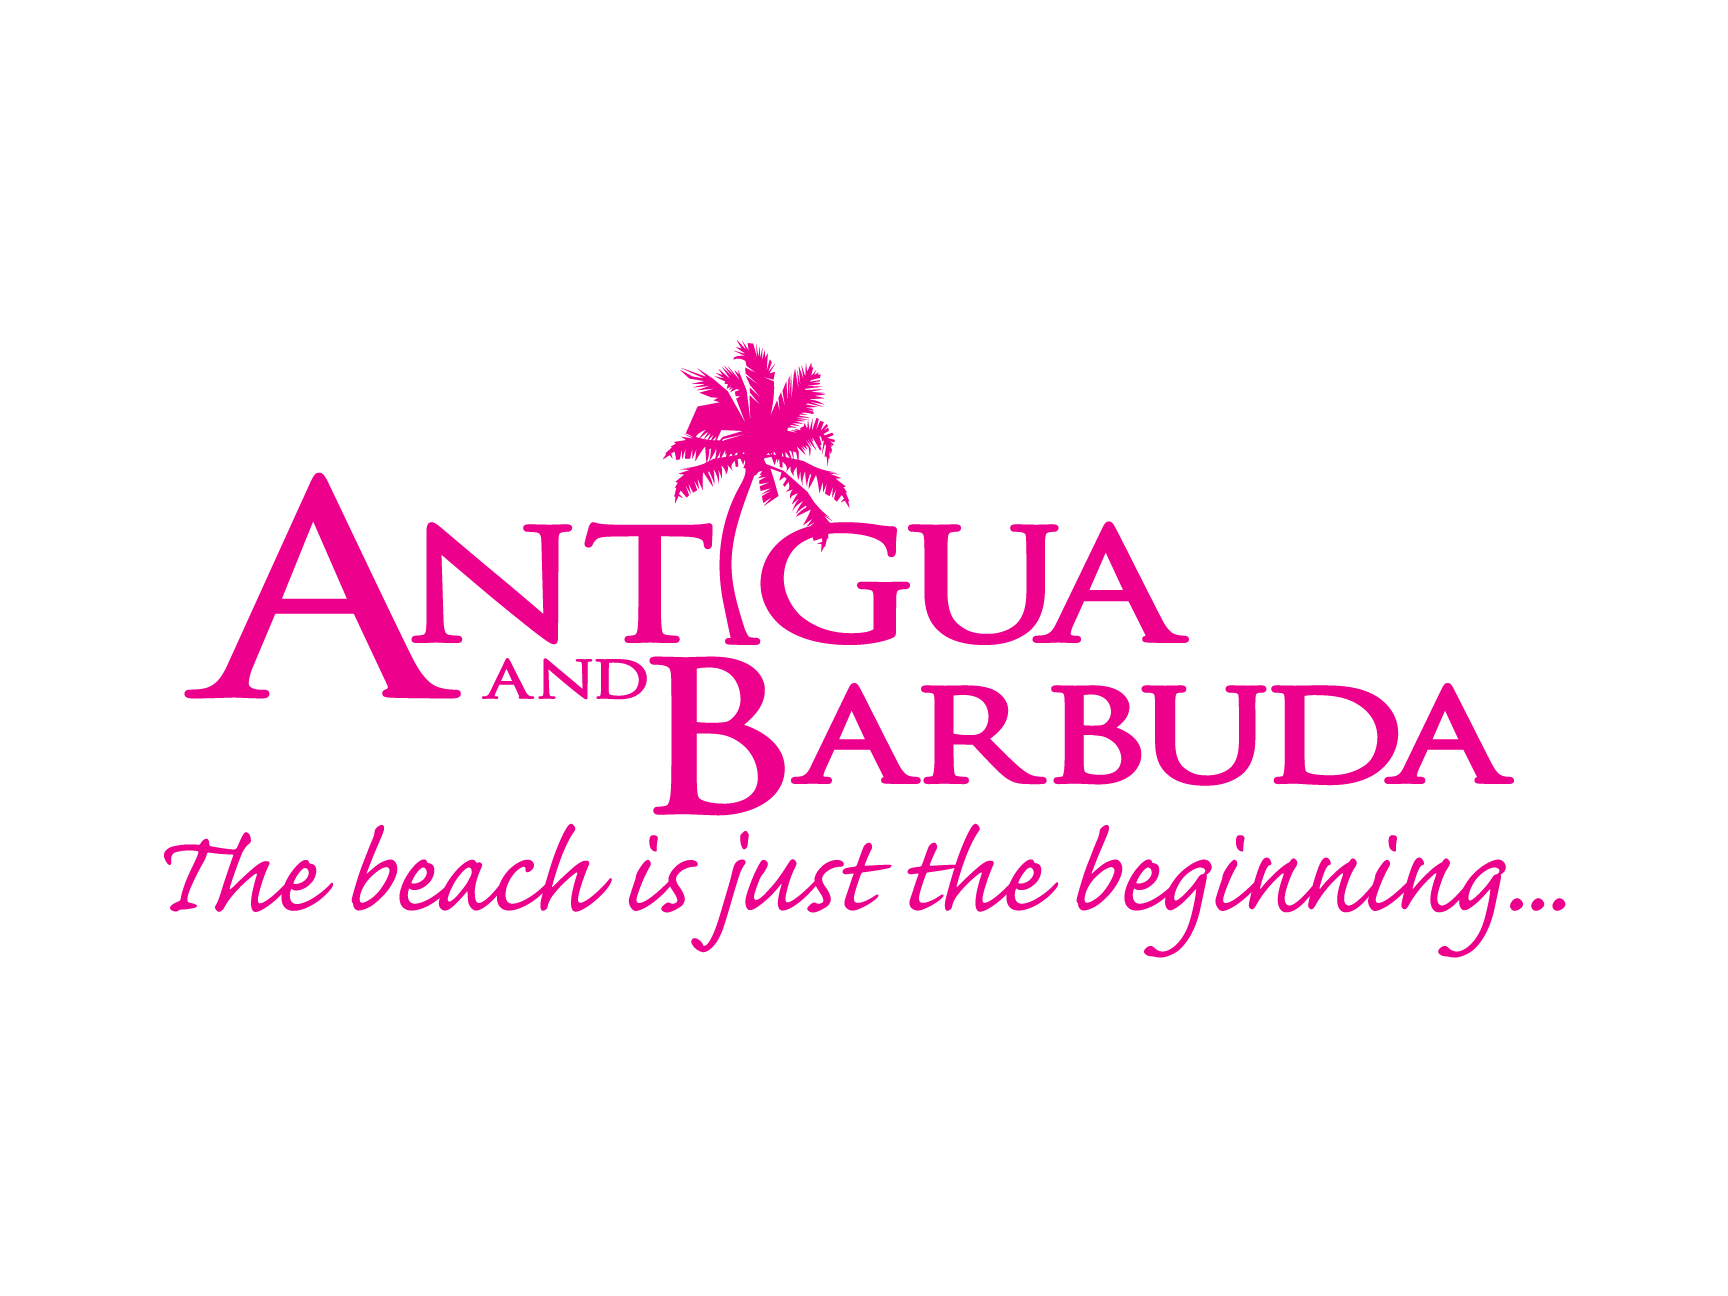 Visit Antigua and Barbuda logo